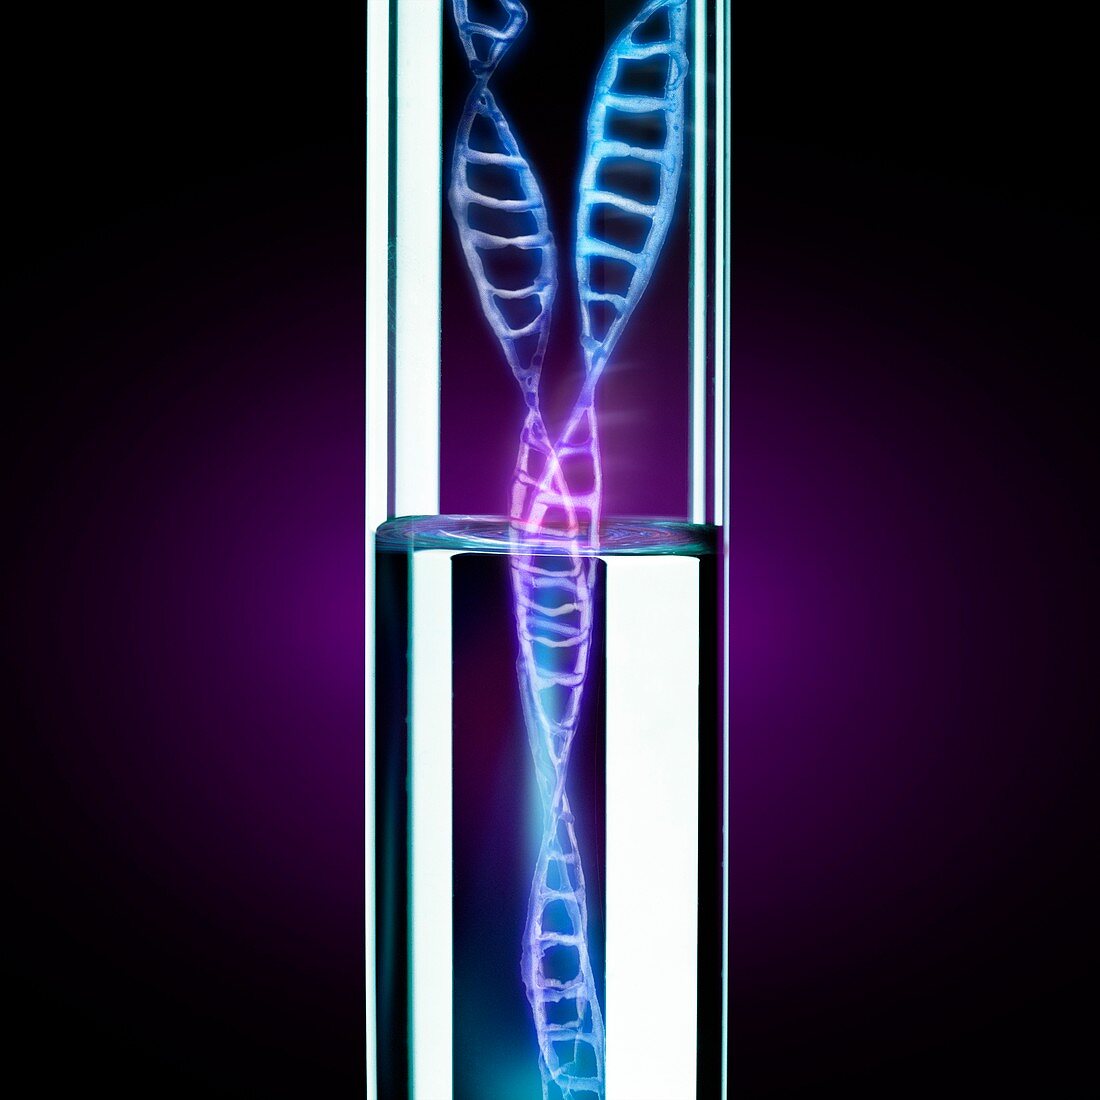 DNA testing,conceptual image